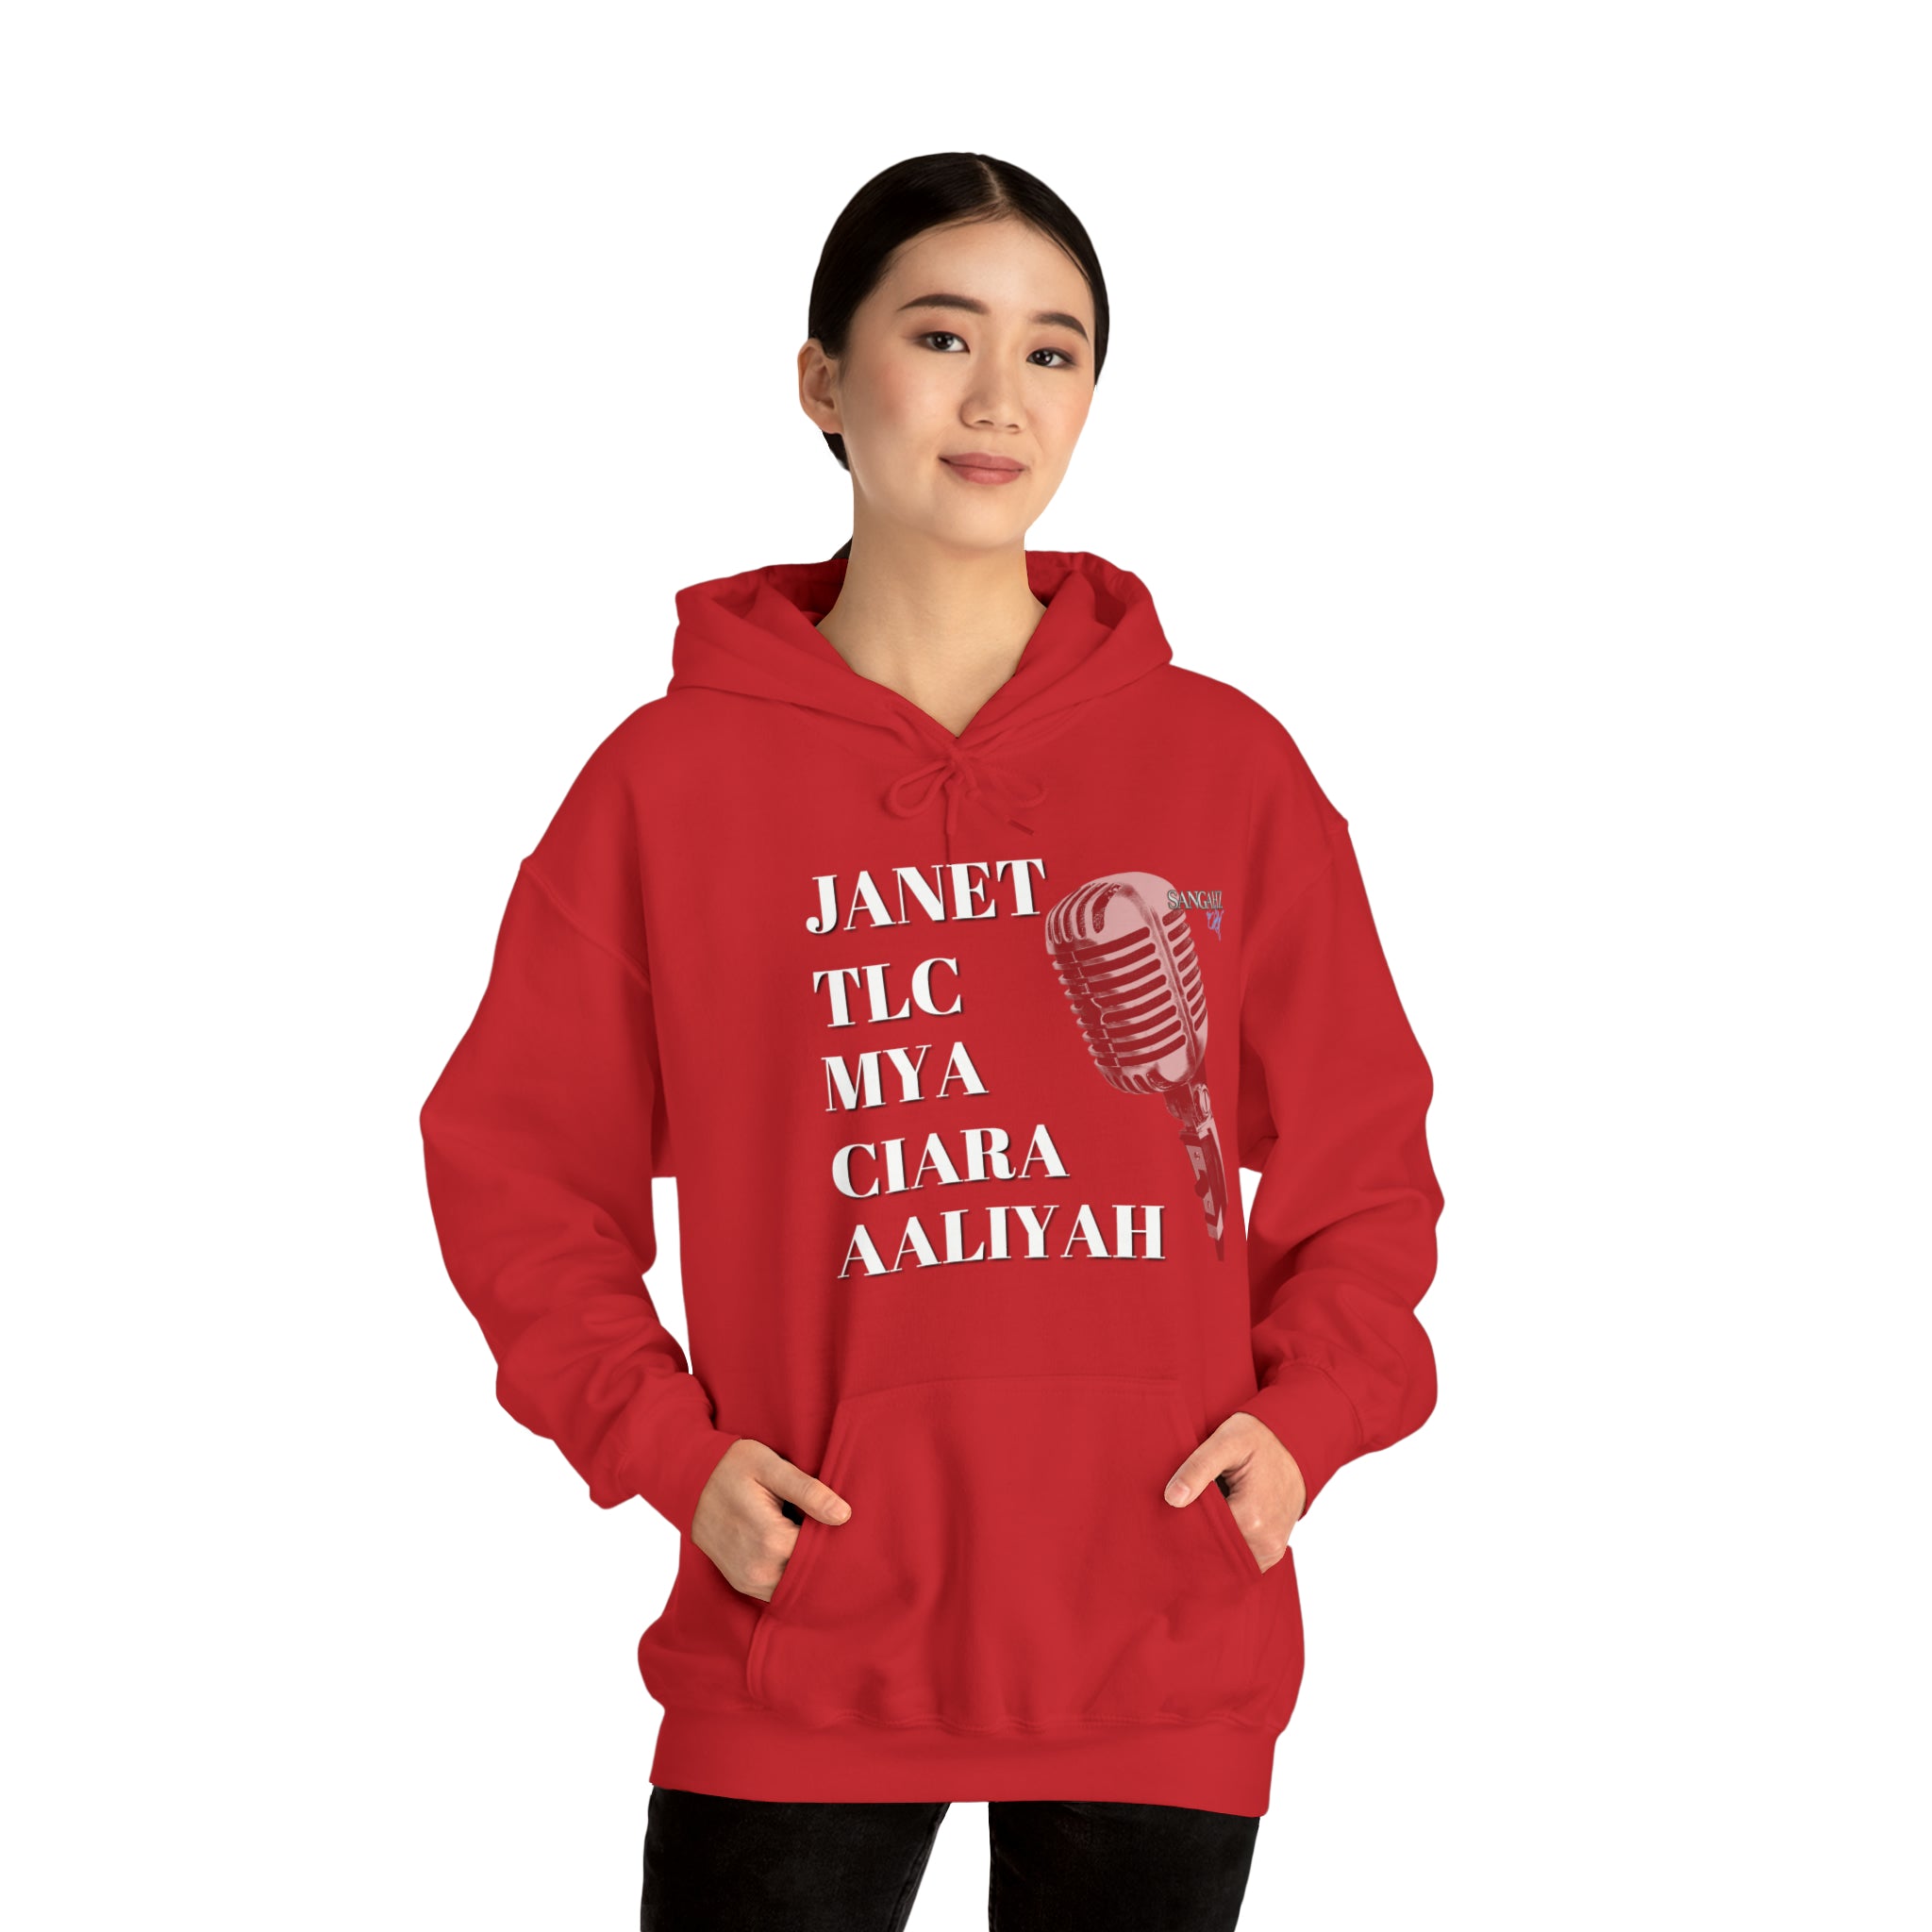 VIBE QUEENS SANGAHZ™ Hooded Sweatshirt WL